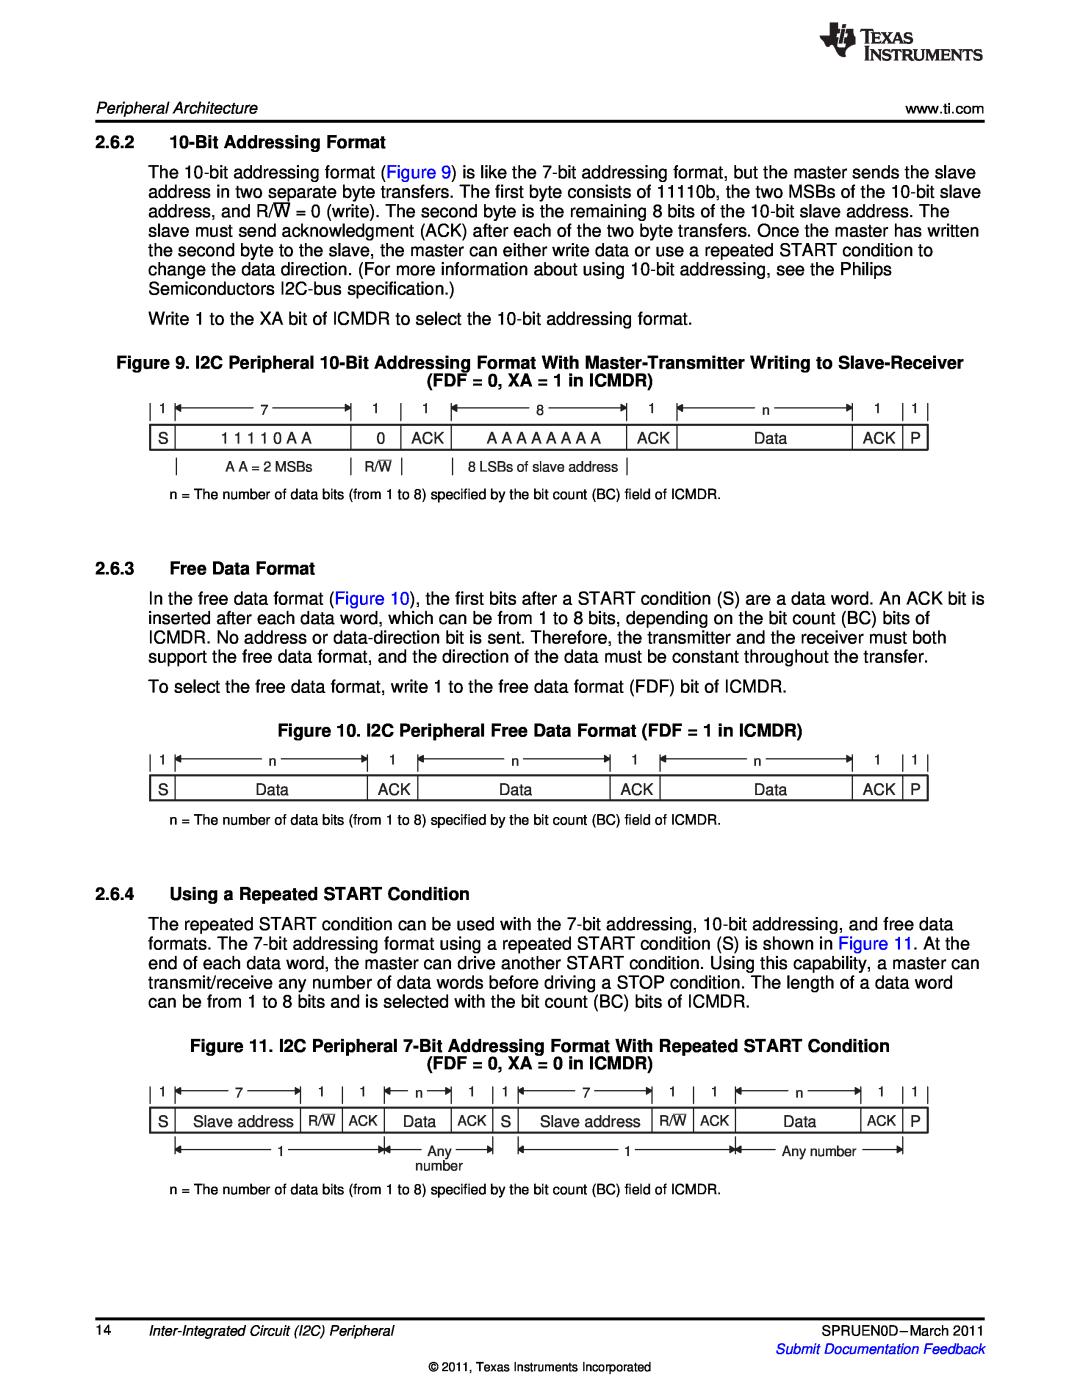 Texas Instruments TMS320C642X manual BitAddressing Format, FDF = 0, XA = 1 in ICMDR, 2.6.3Free Data Format 